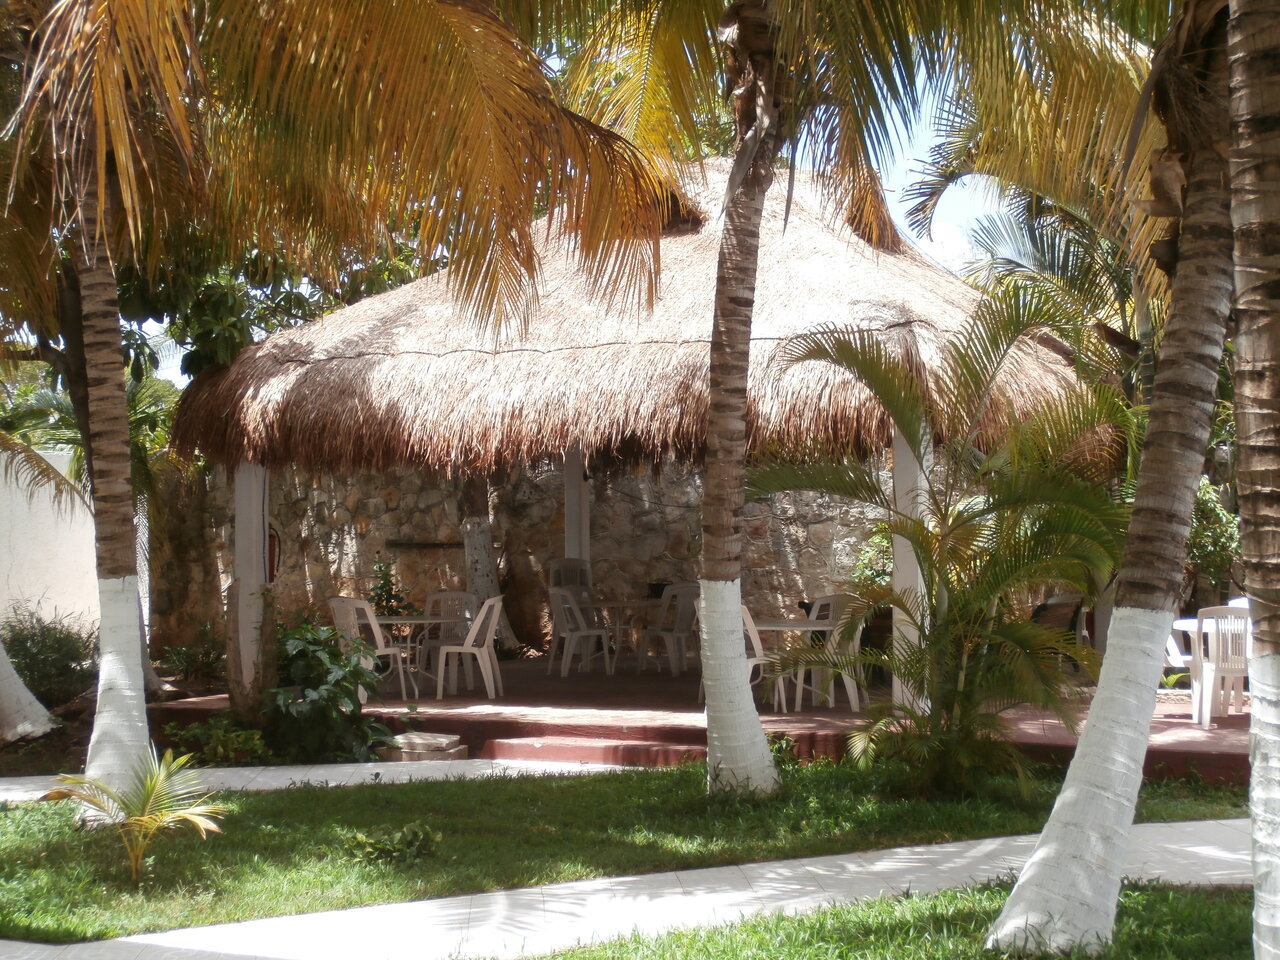 Caribe Internacional Cancun